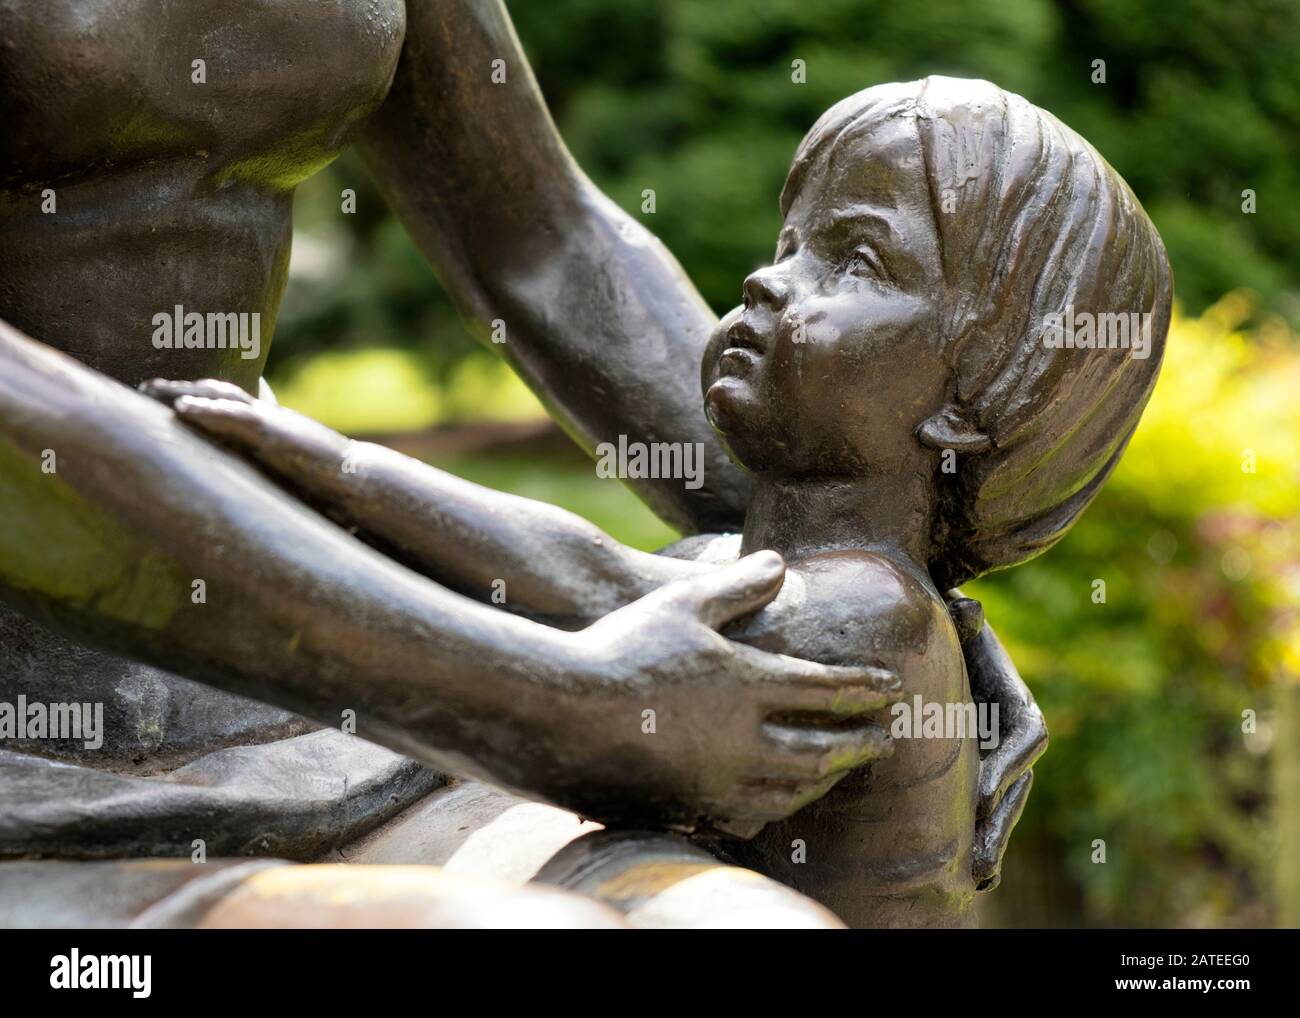 Closeup view of the bronze sculpture La Maternidad of the artist Félix Alonso Arena in Campo de San Francisco urban Park (Oviedo, Asturias, Spain) Stock Photo